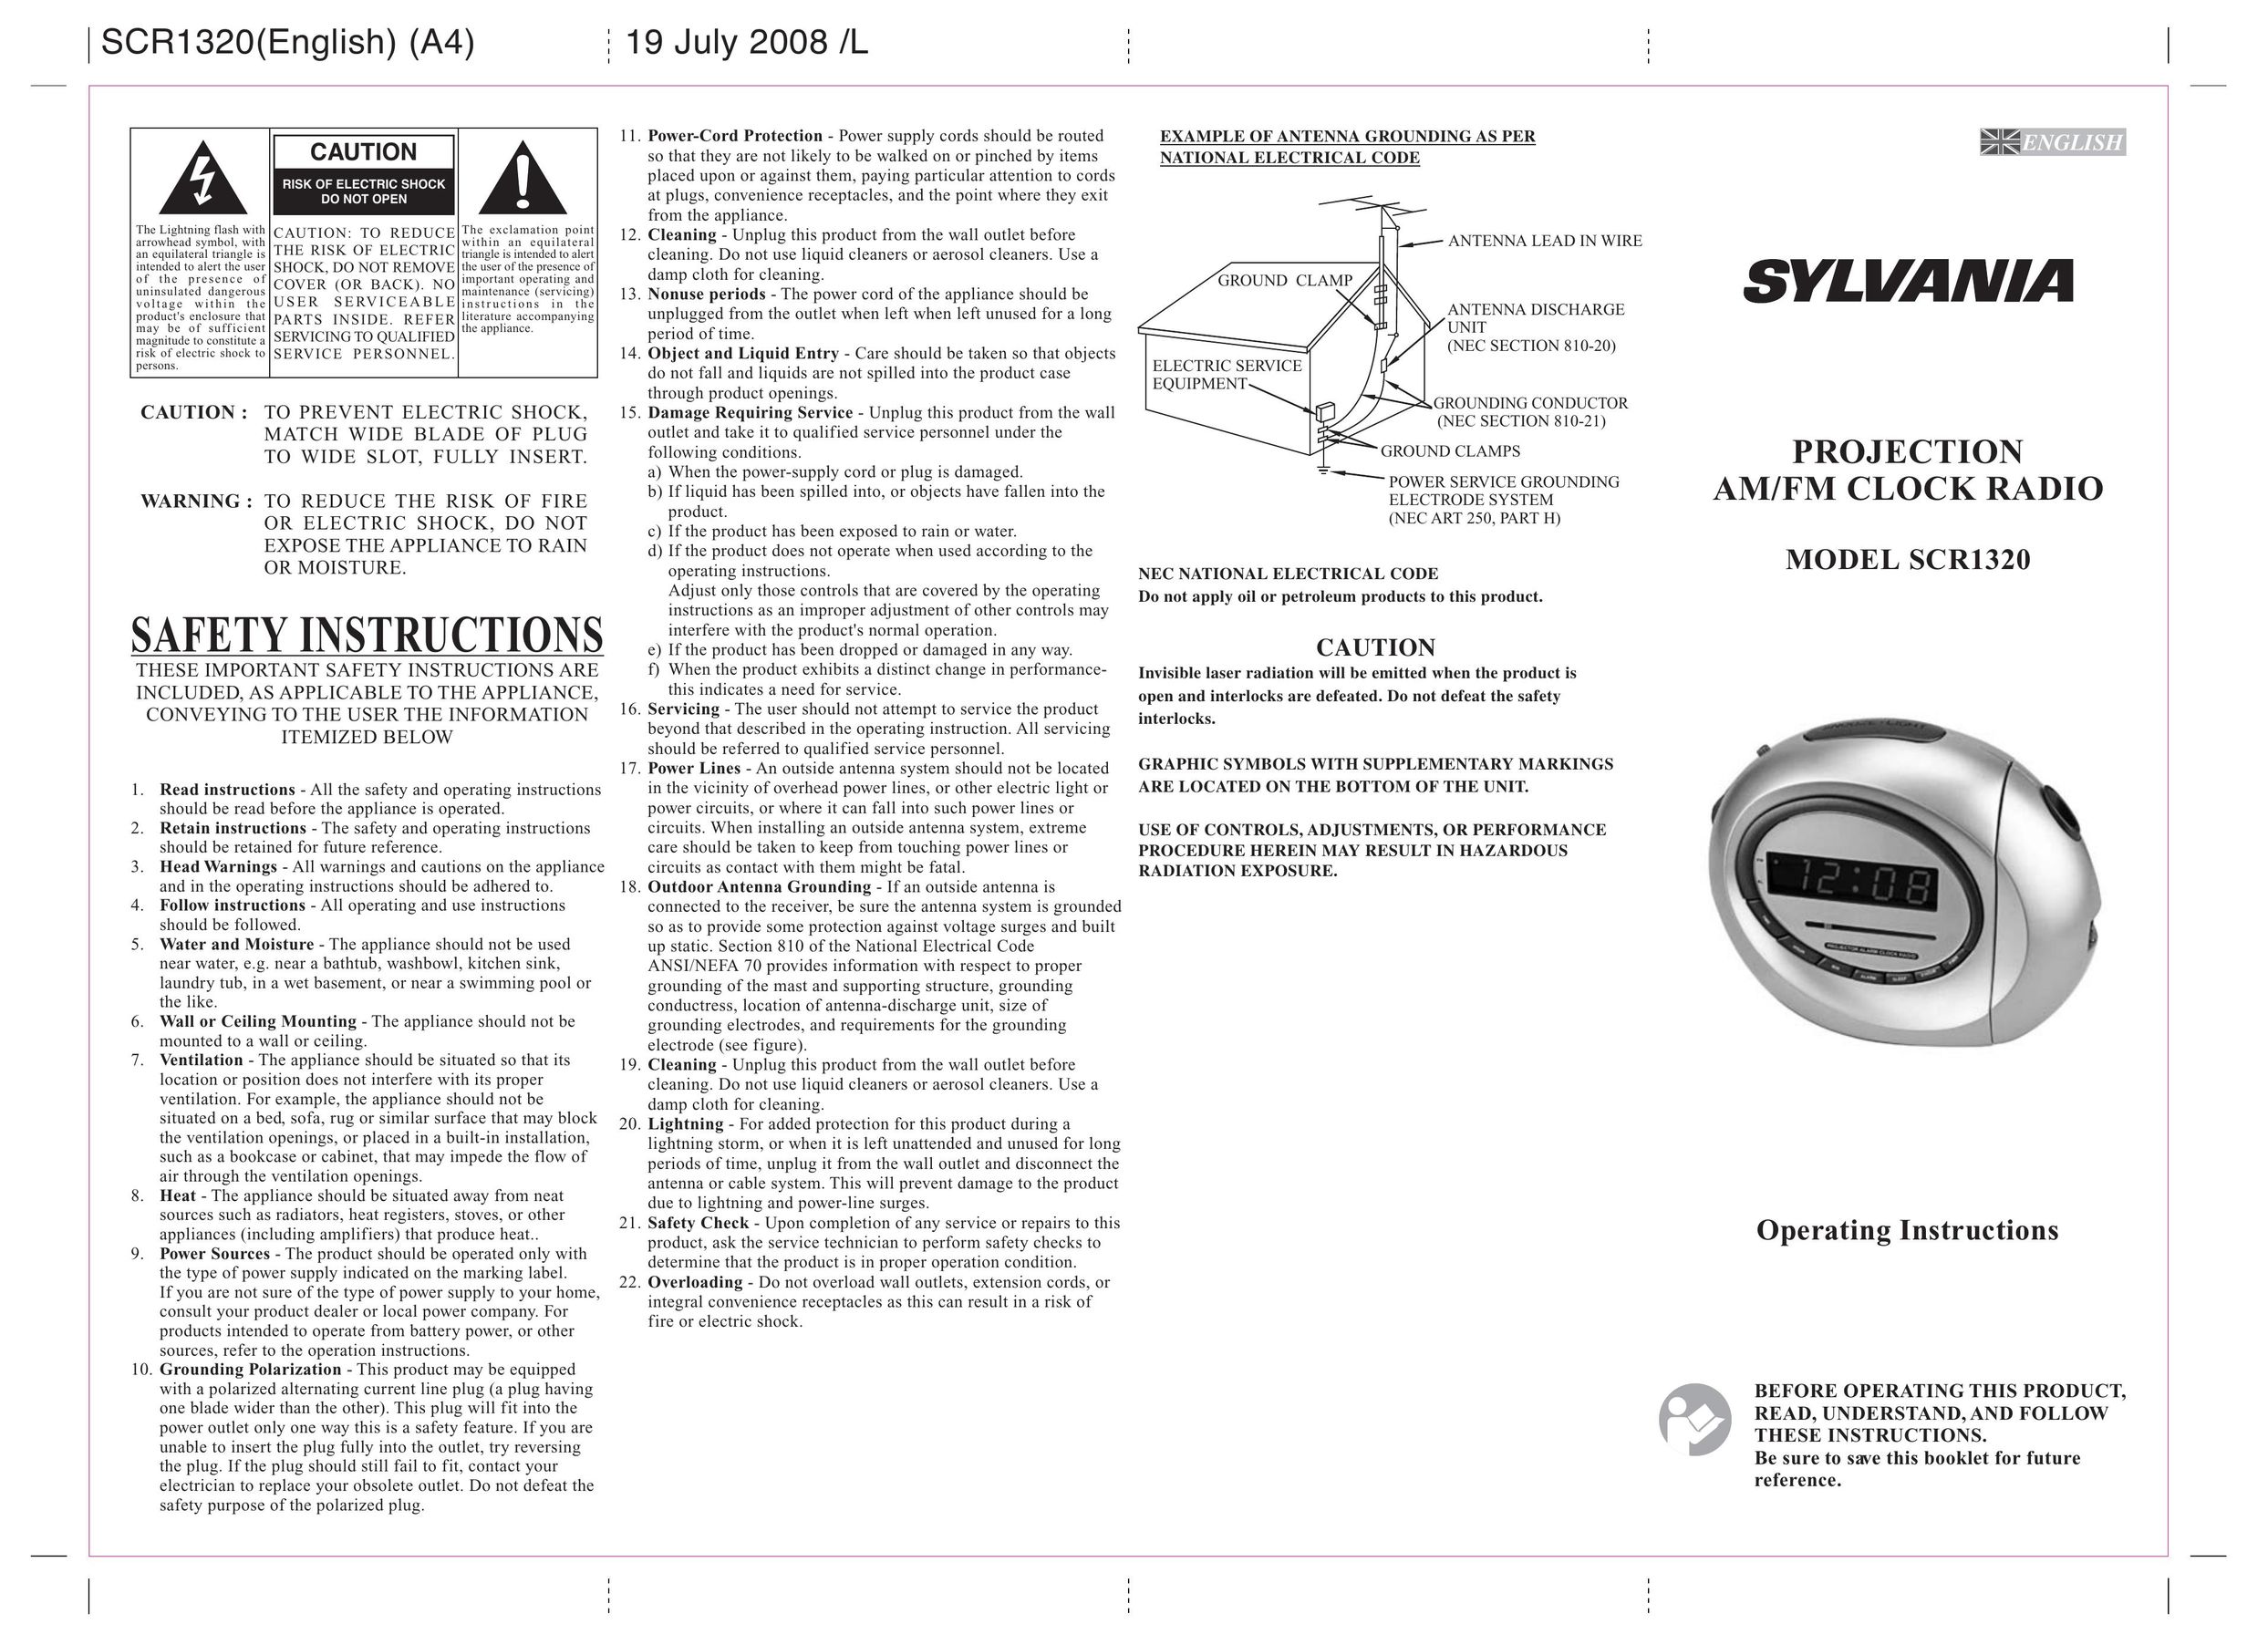 Sylvania SCR1320 Stereo System User Manual